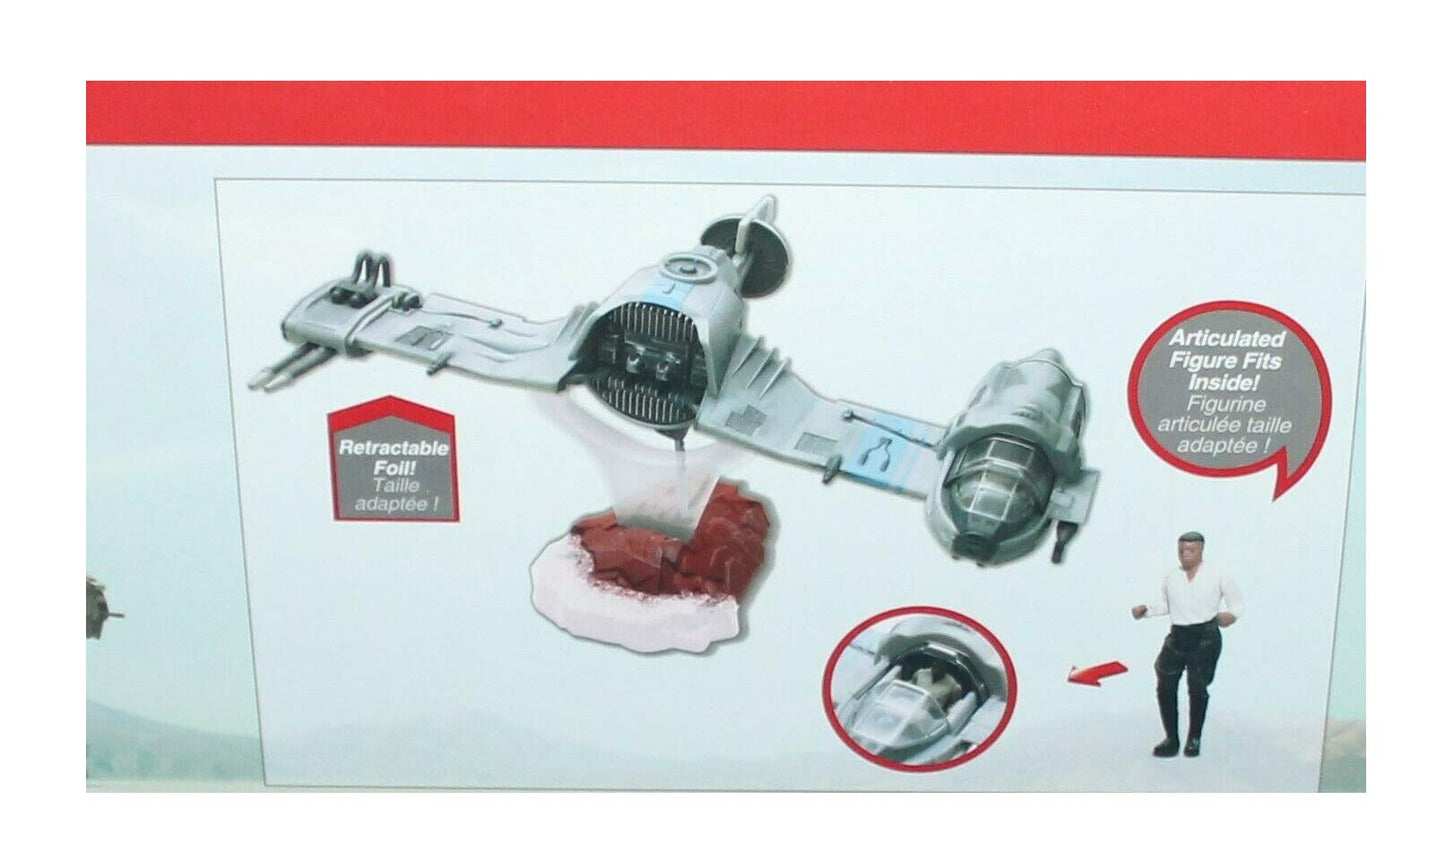 Star Wars The Last Jedi Disney Parks Exclusive Finn & Ski Speeder Set - Mint In Sealed Box